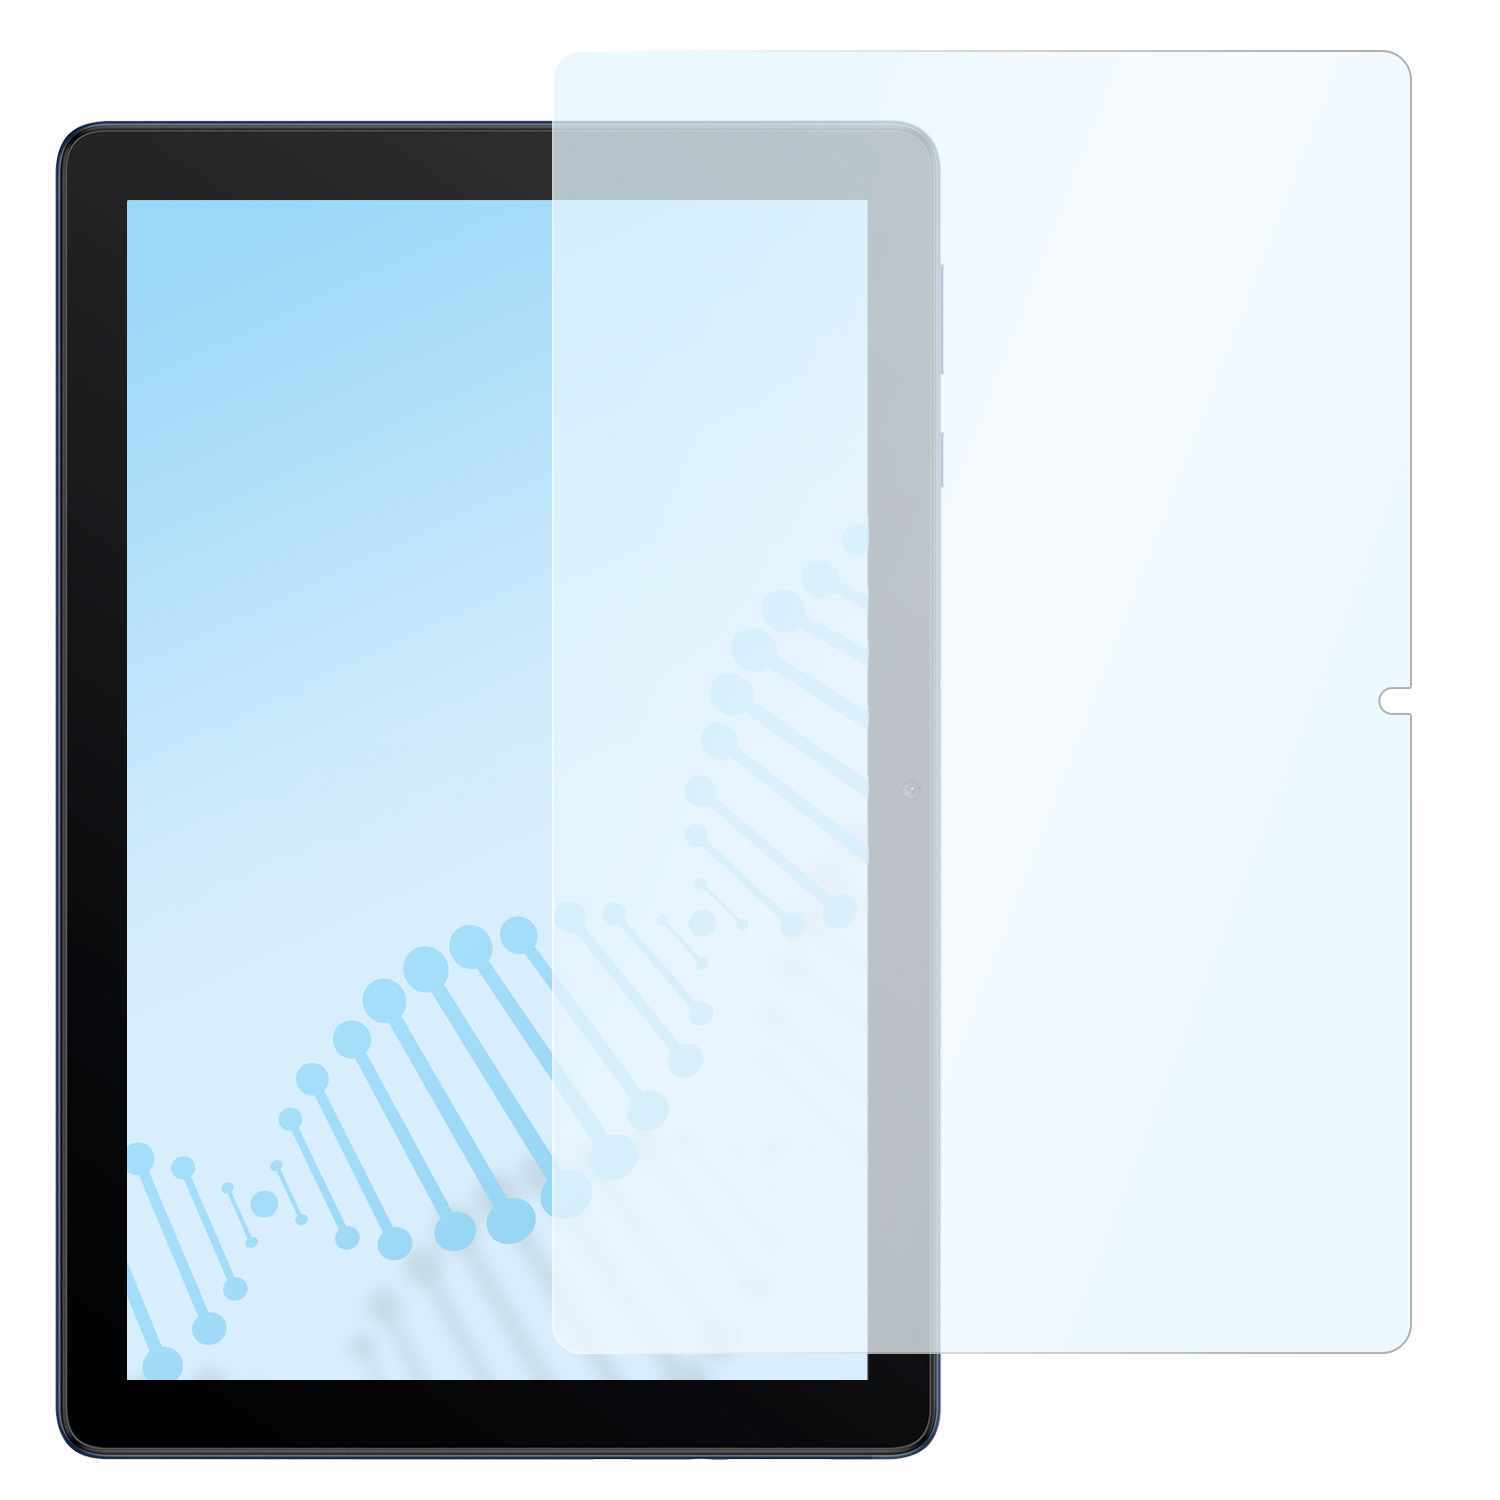 SLABO antibakterielle flexible Hybridglasfolie T10 MatePad Huawei | T10s) MatePad Displayschutz(für